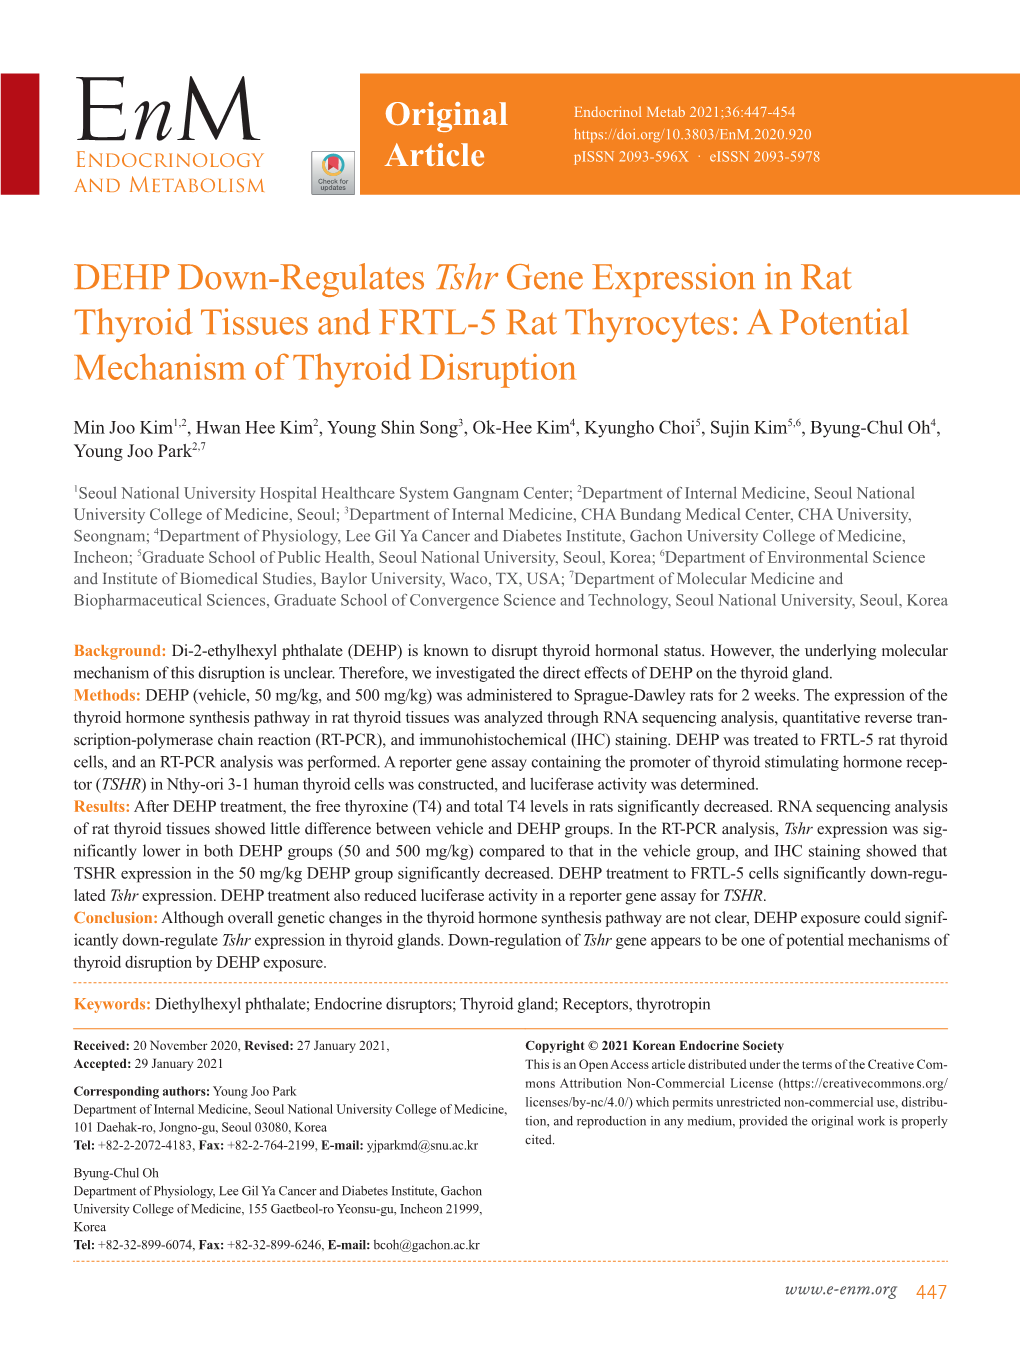 DEHP Down-Regulates Tshr Gene Expression in Rat Thyroid Tissues and FRTL-5 Rat Thyrocytes: a Potential Mechanism of Thyroid Disruption